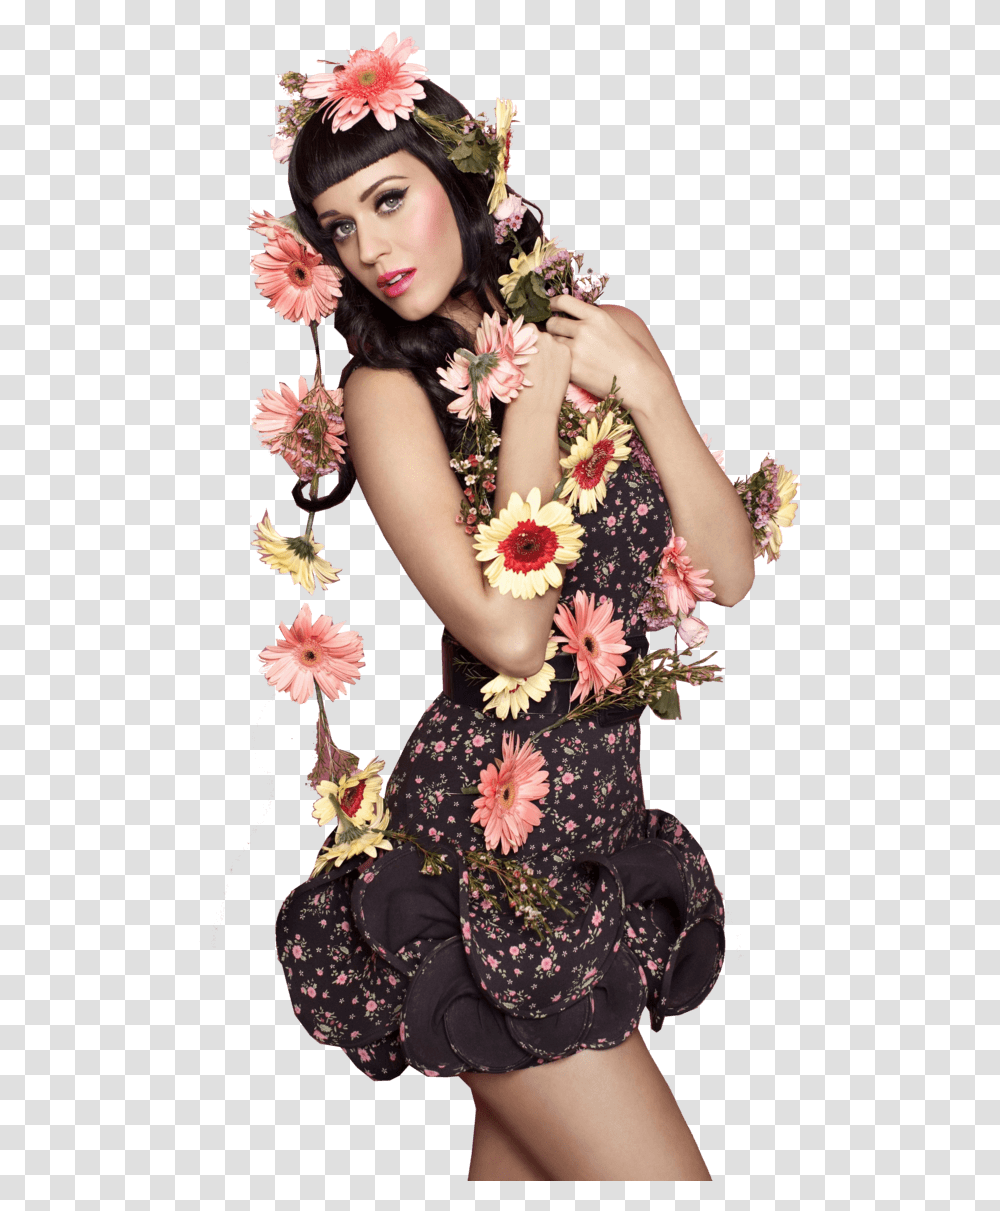 Flower Dress Katy Perry Katy Perry Swish Swish Lyrics, Plant, Person, Flower Arrangement, Ornament Transparent Png